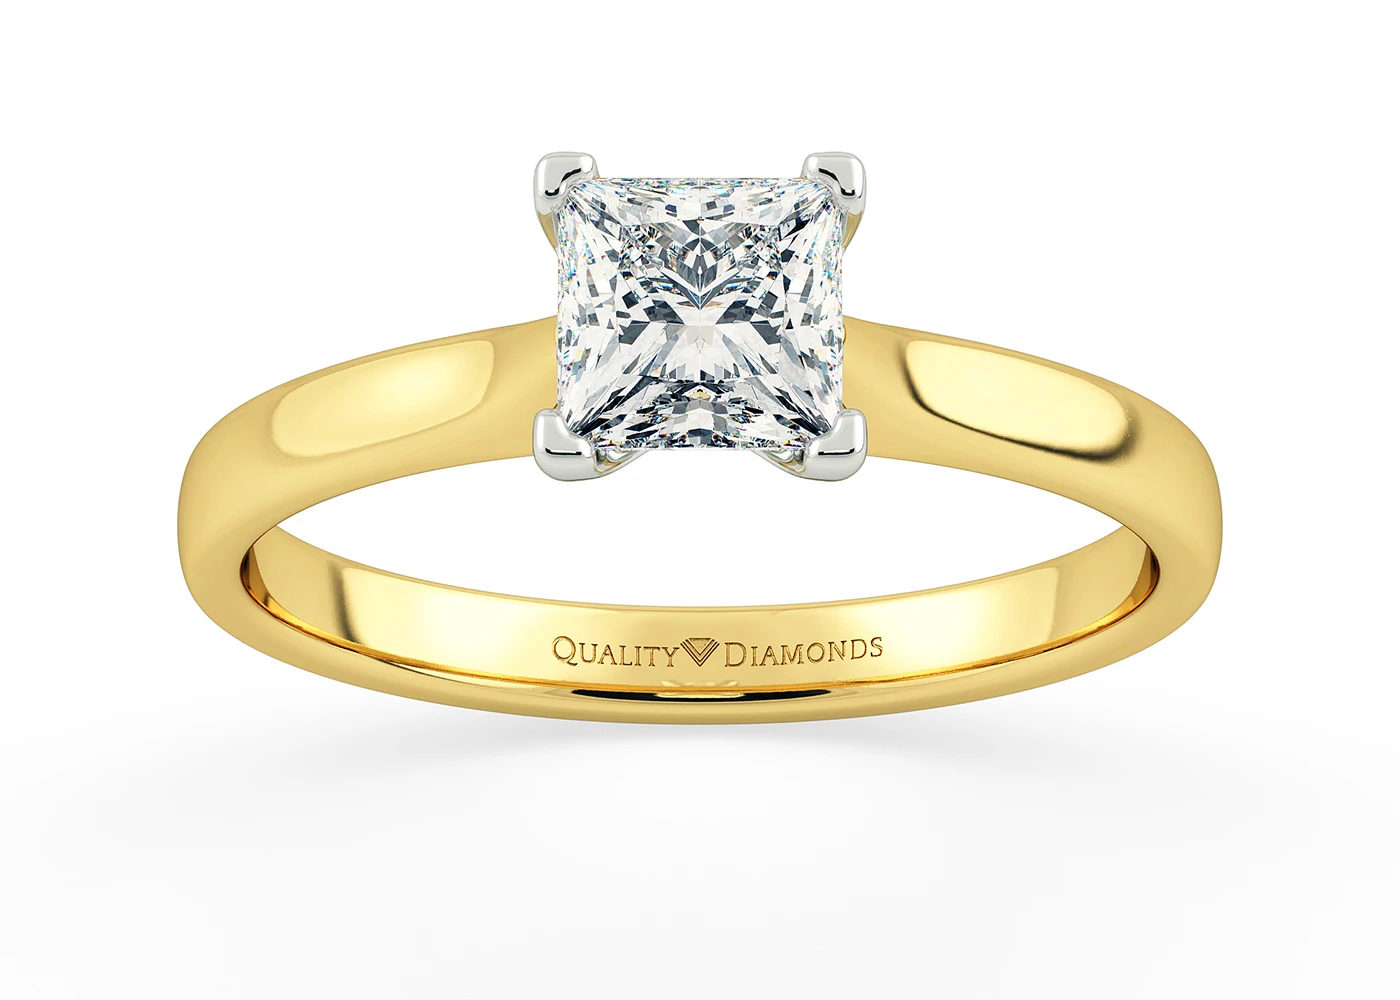 Princess Amara Diamond Ring in 9K Yellow Gold